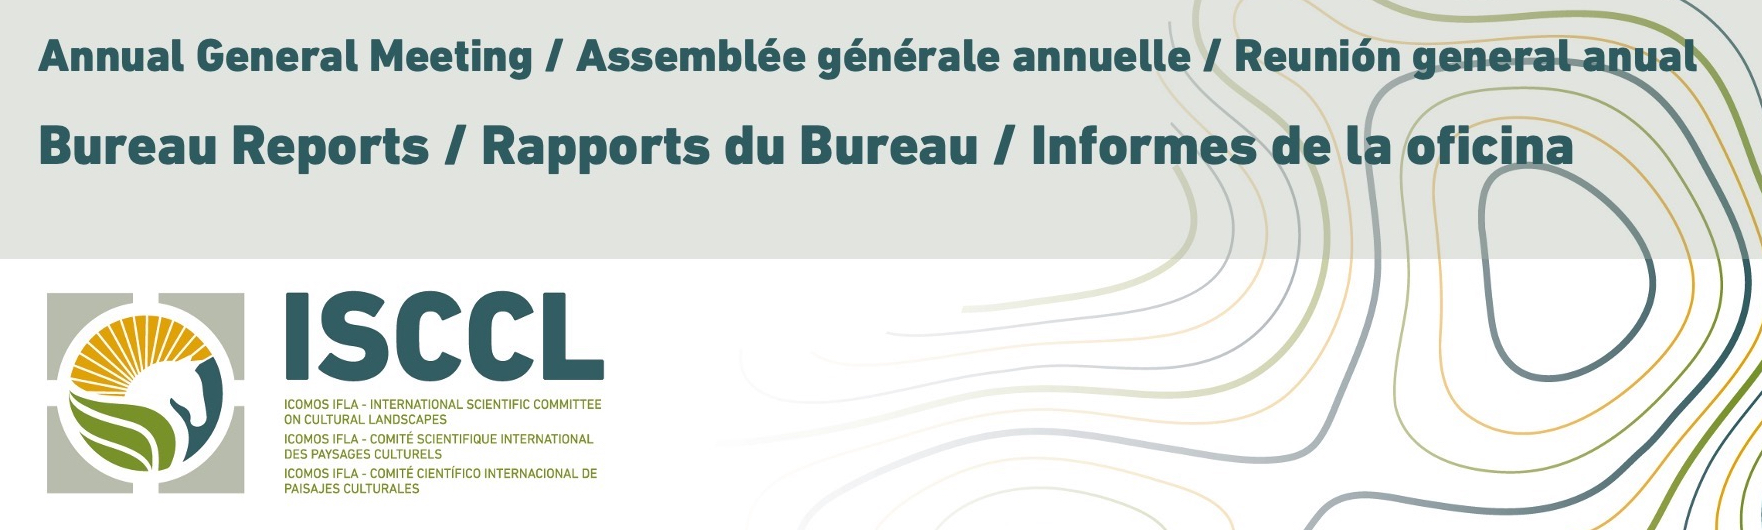 Annual Reports of the Bureau // Rapports annuels du Bureau // Informes anuales de la Oficina